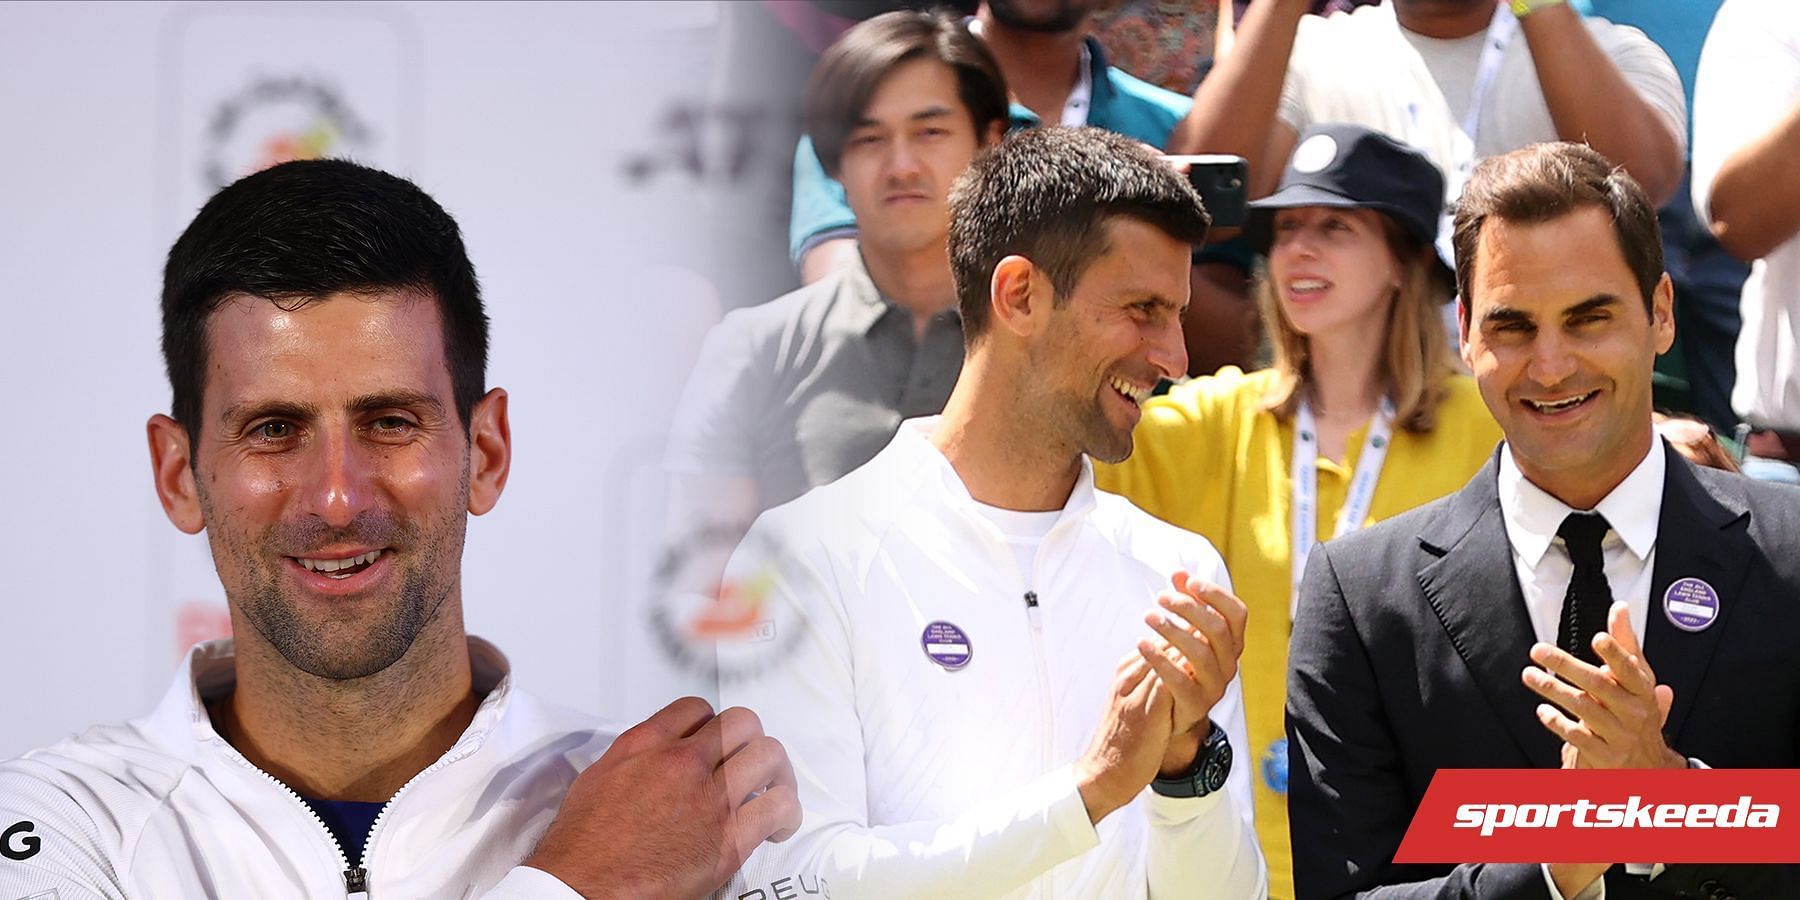 Novak Djokovic and Roger Federer during the Wimbledon Centre Court centenary celebration